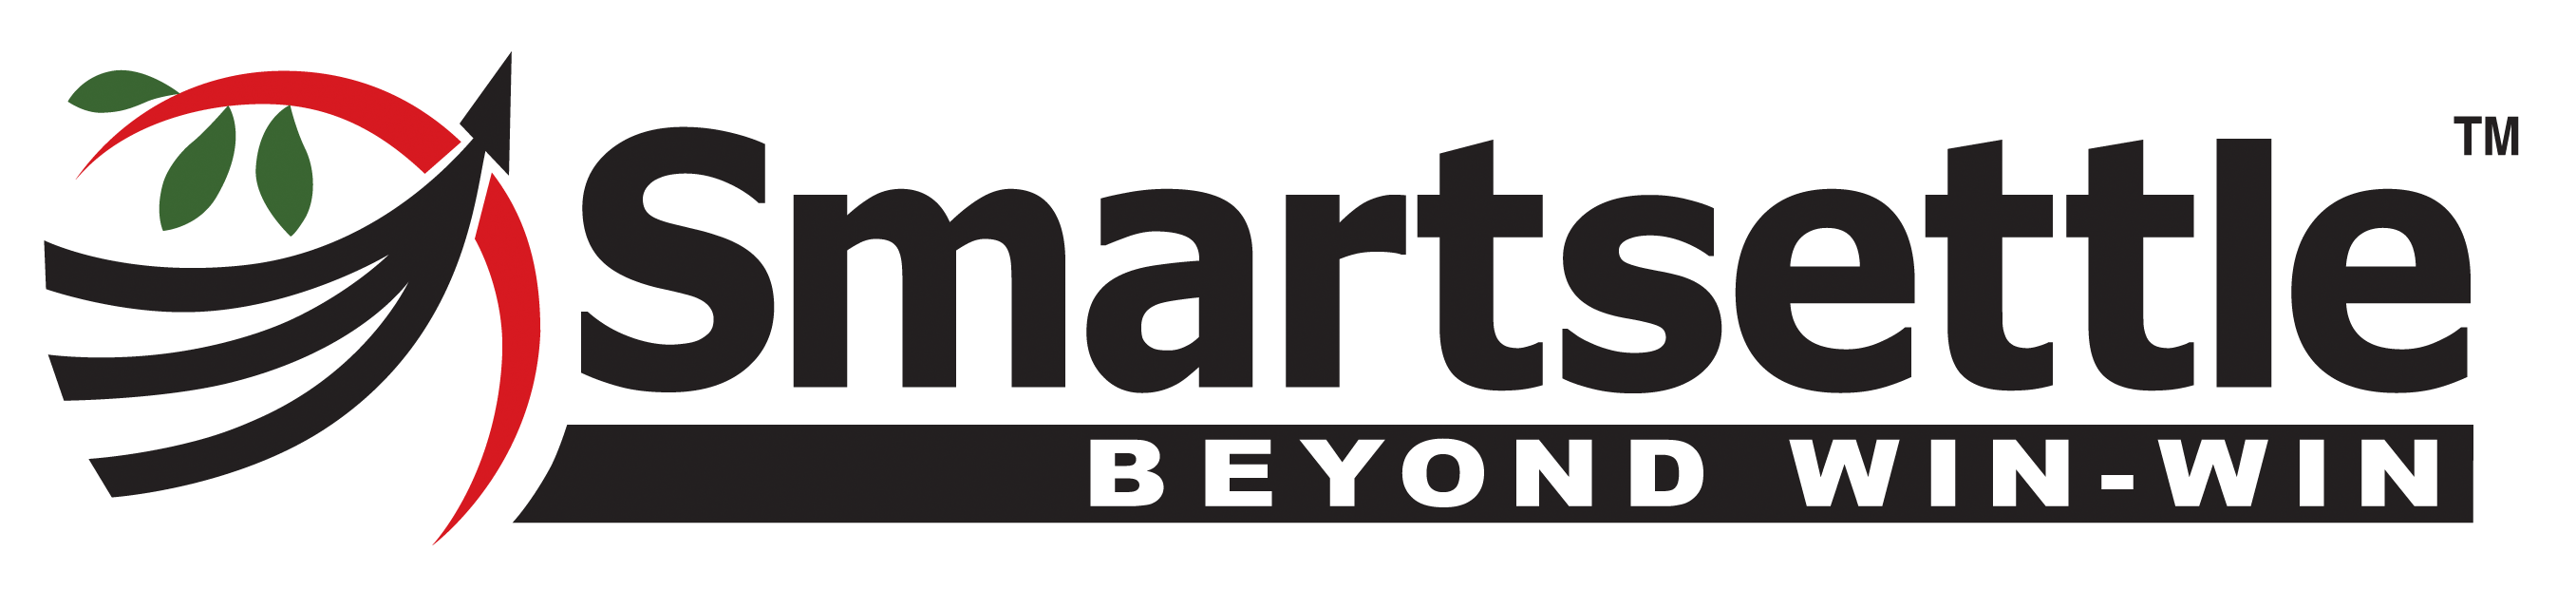 Smartsettle_logo